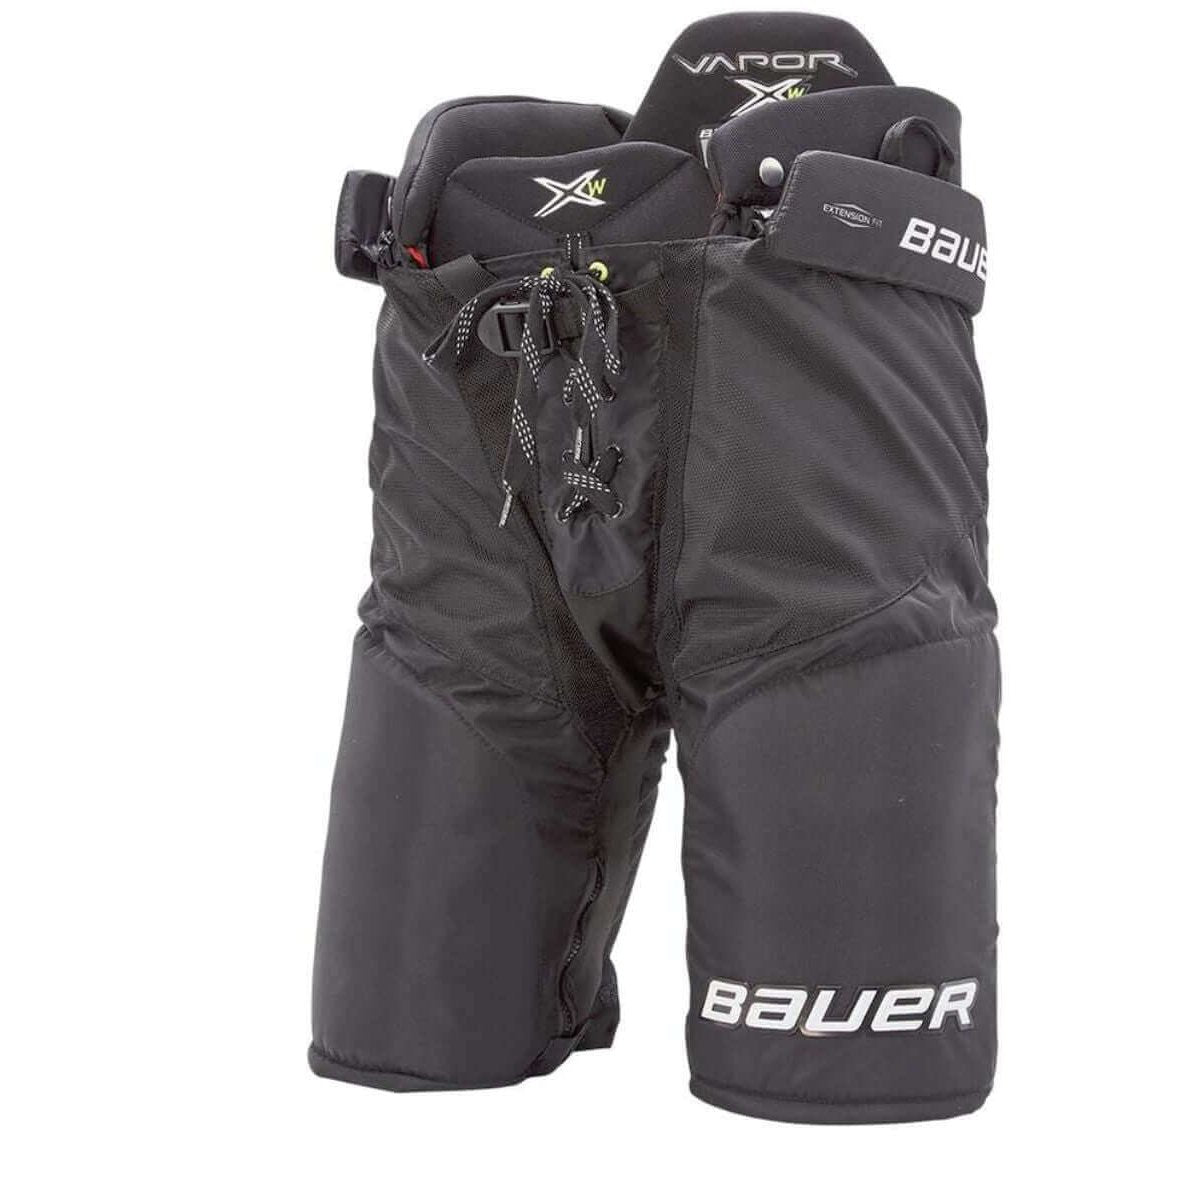 Bauer S20 Vapor X-W Hockey Pants Women